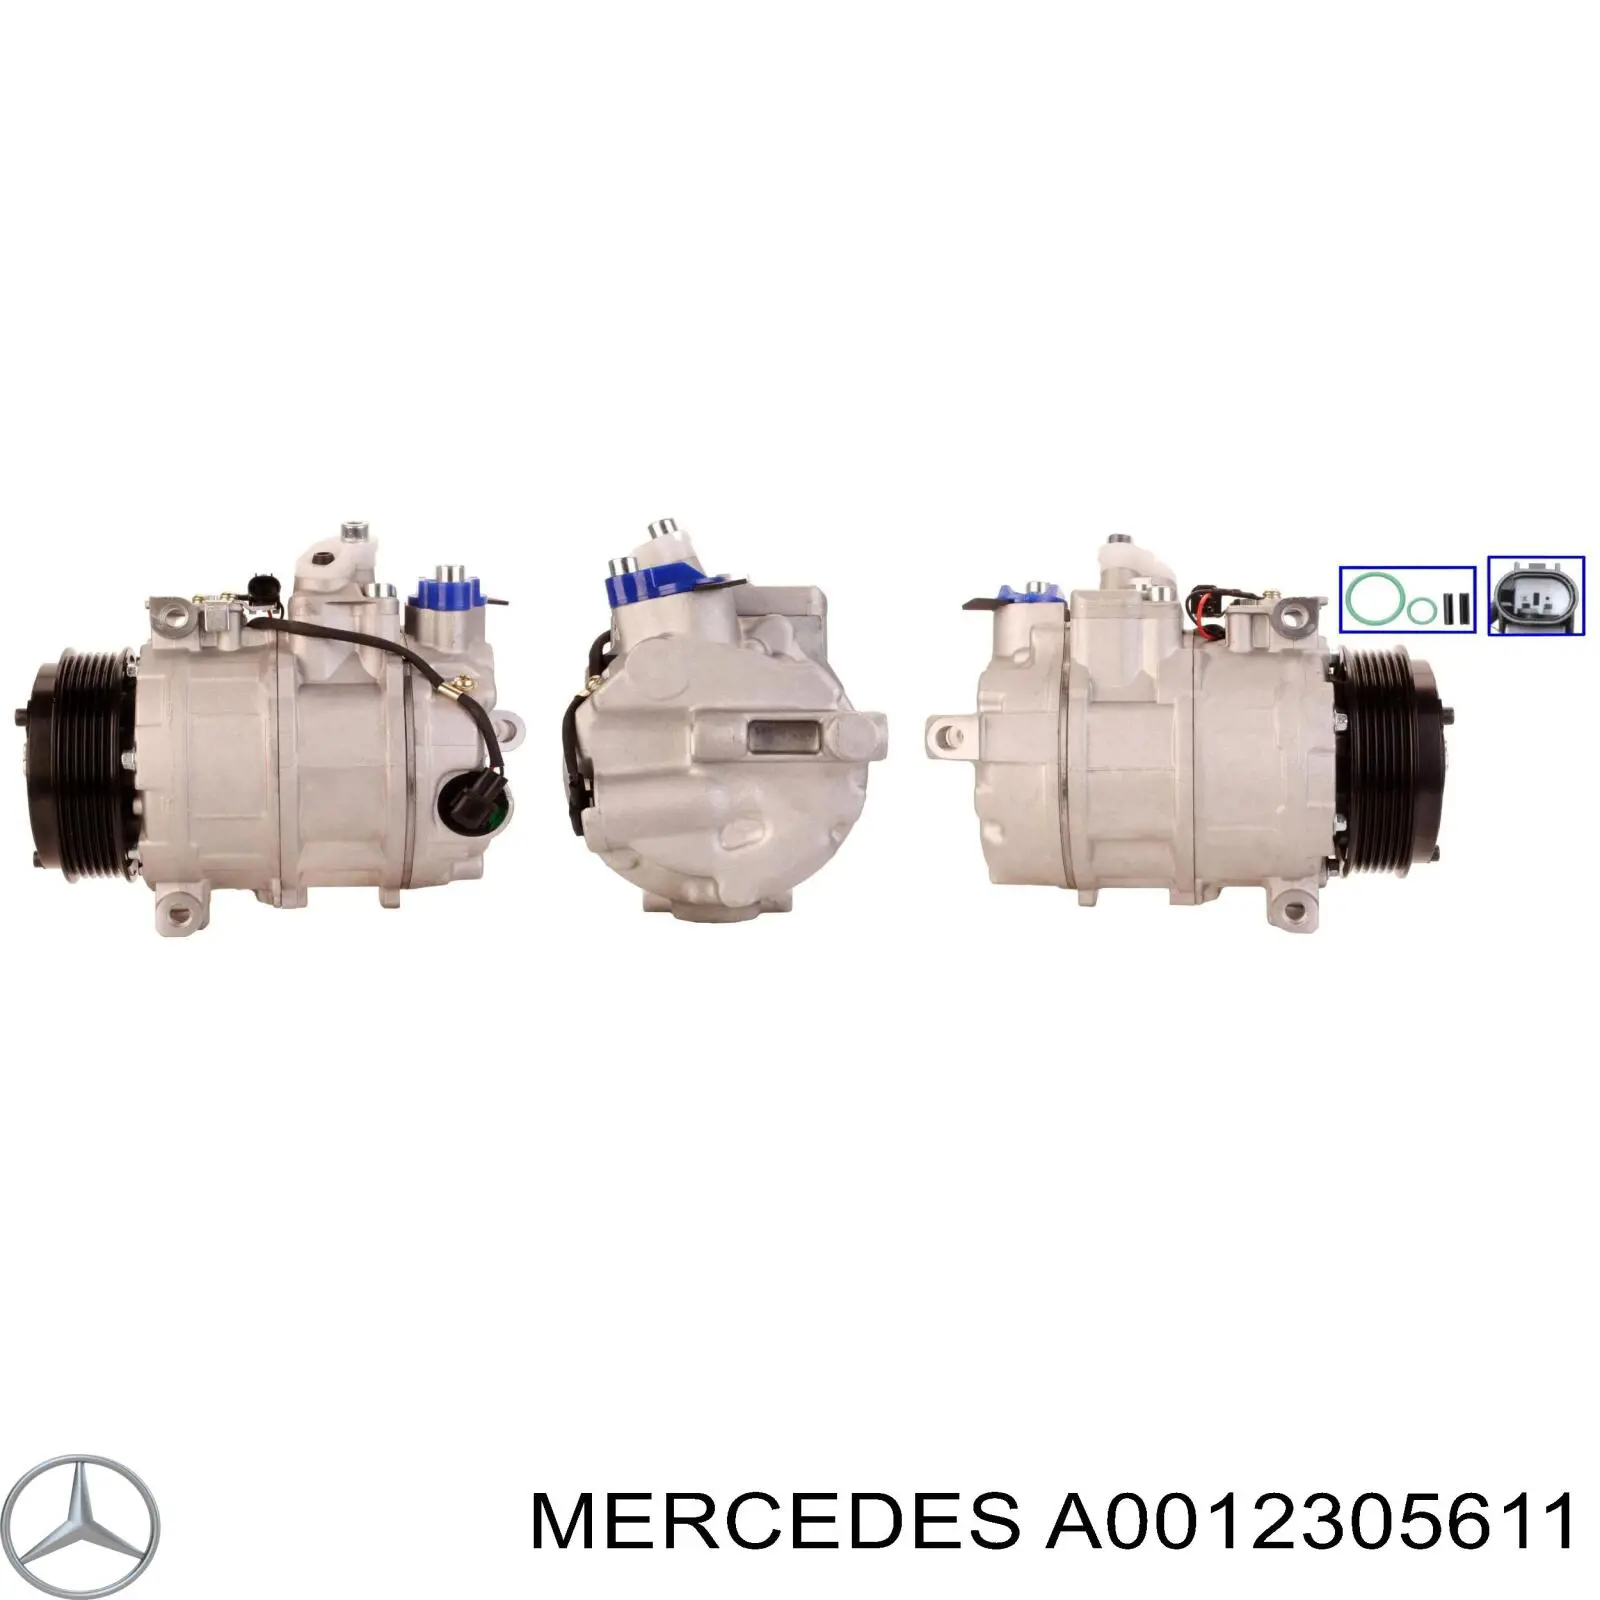 A0012305611 Mercedes compresor de aire acondicionado